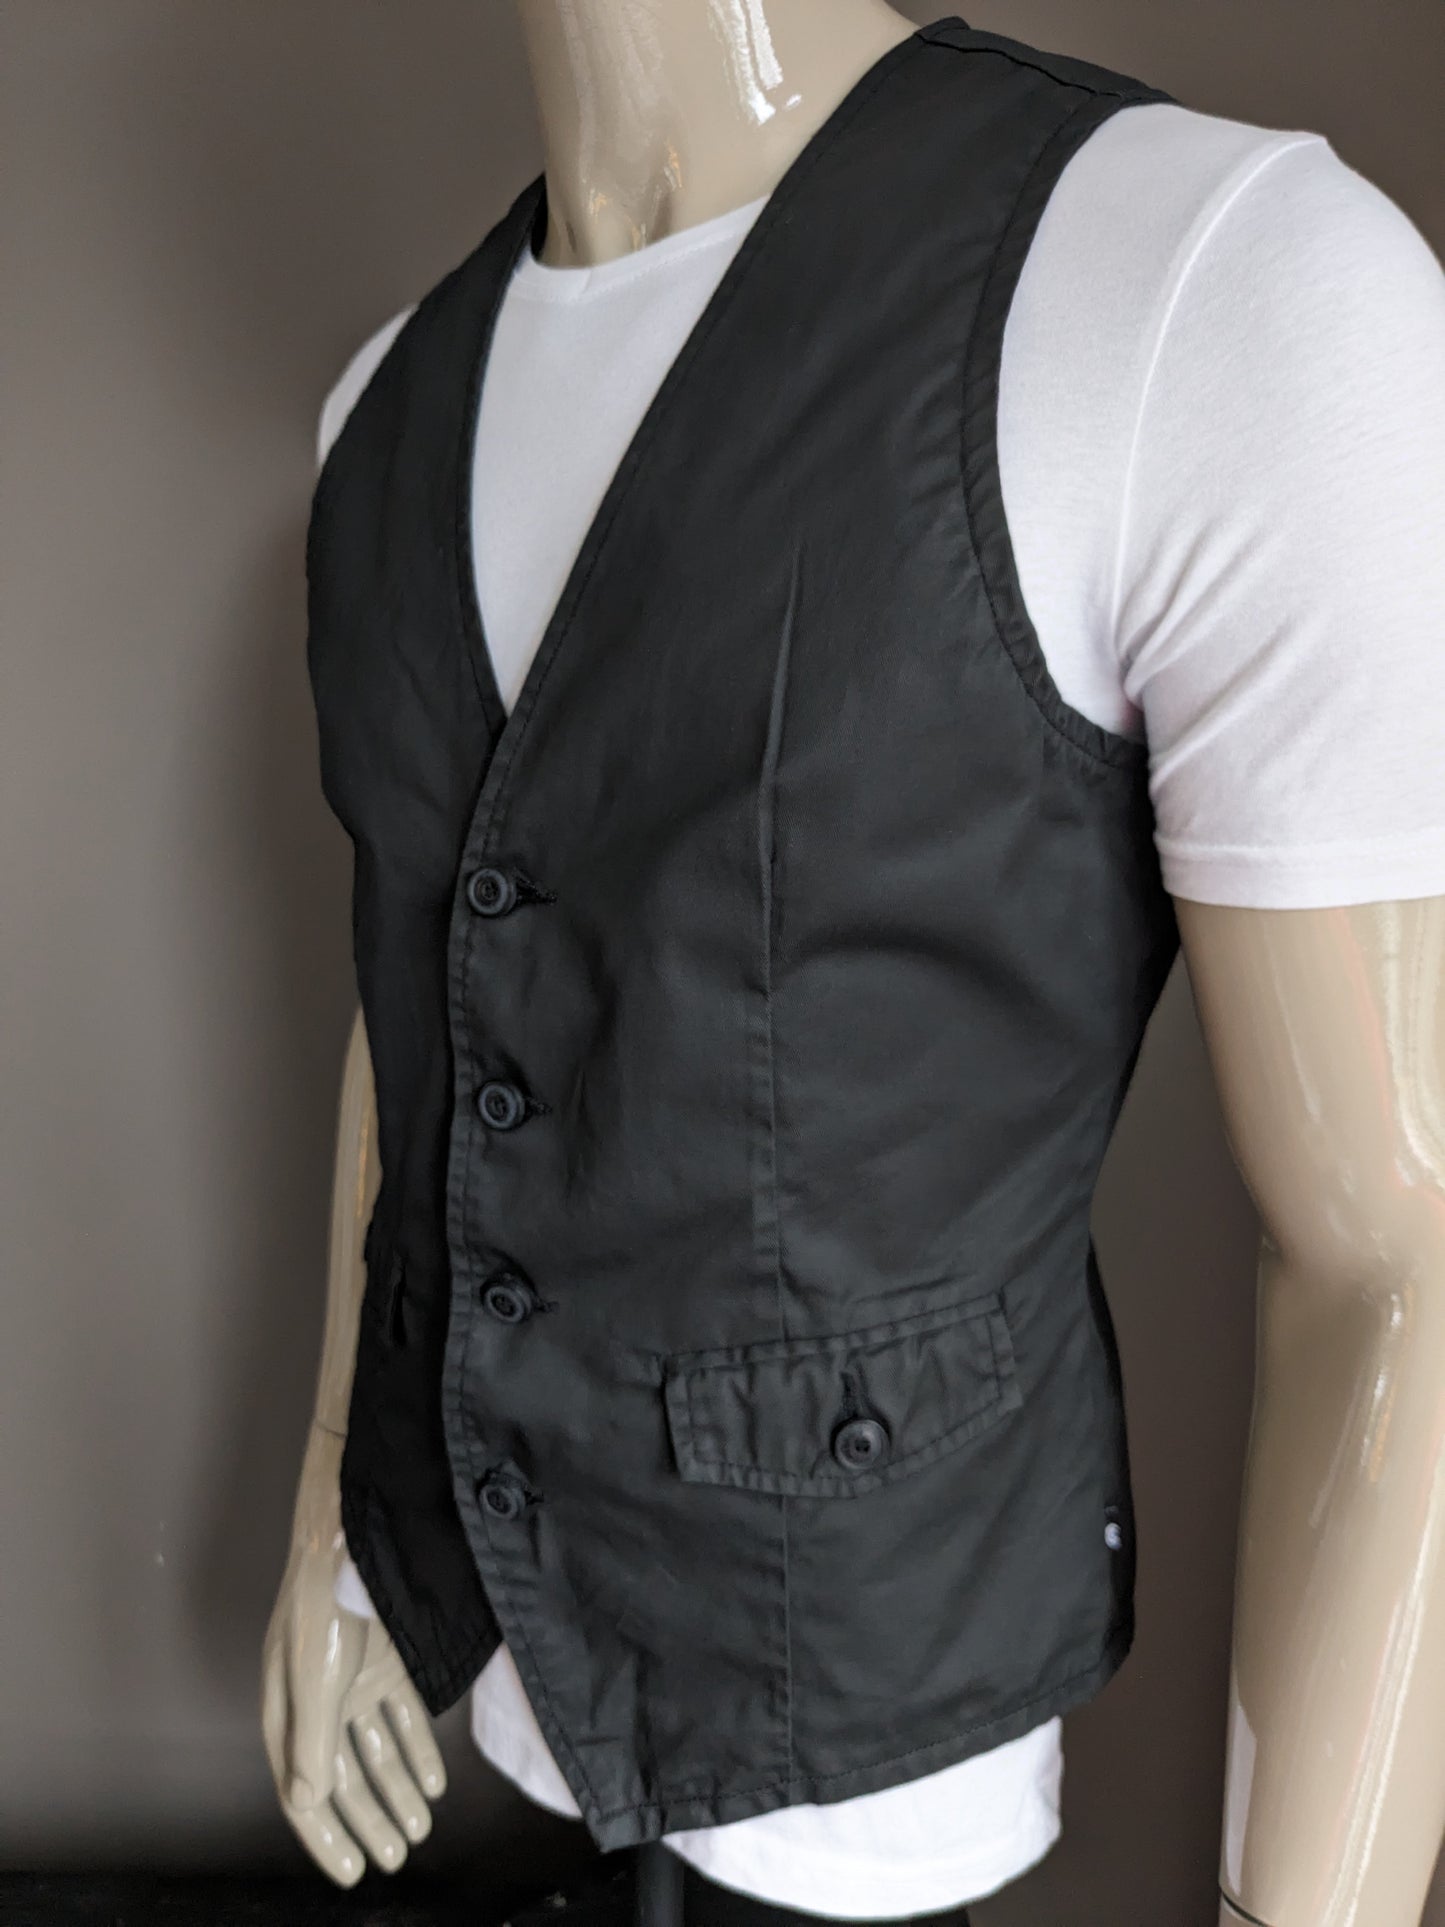 CoolCat waistcoat. Learn look. Black colored. Size M. #335